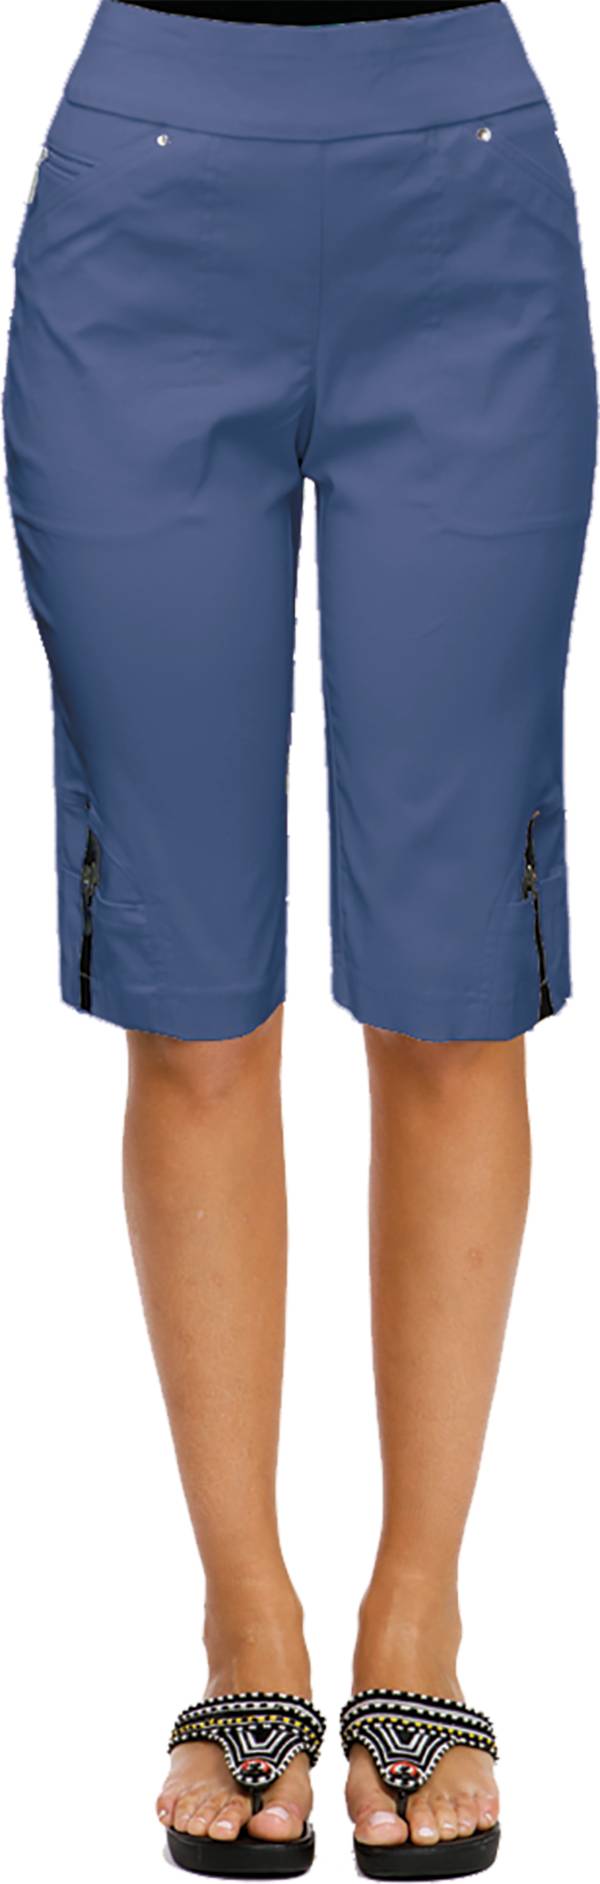 Jamie Sadock Women's Skinnyliscious Knee Golf Capris product image